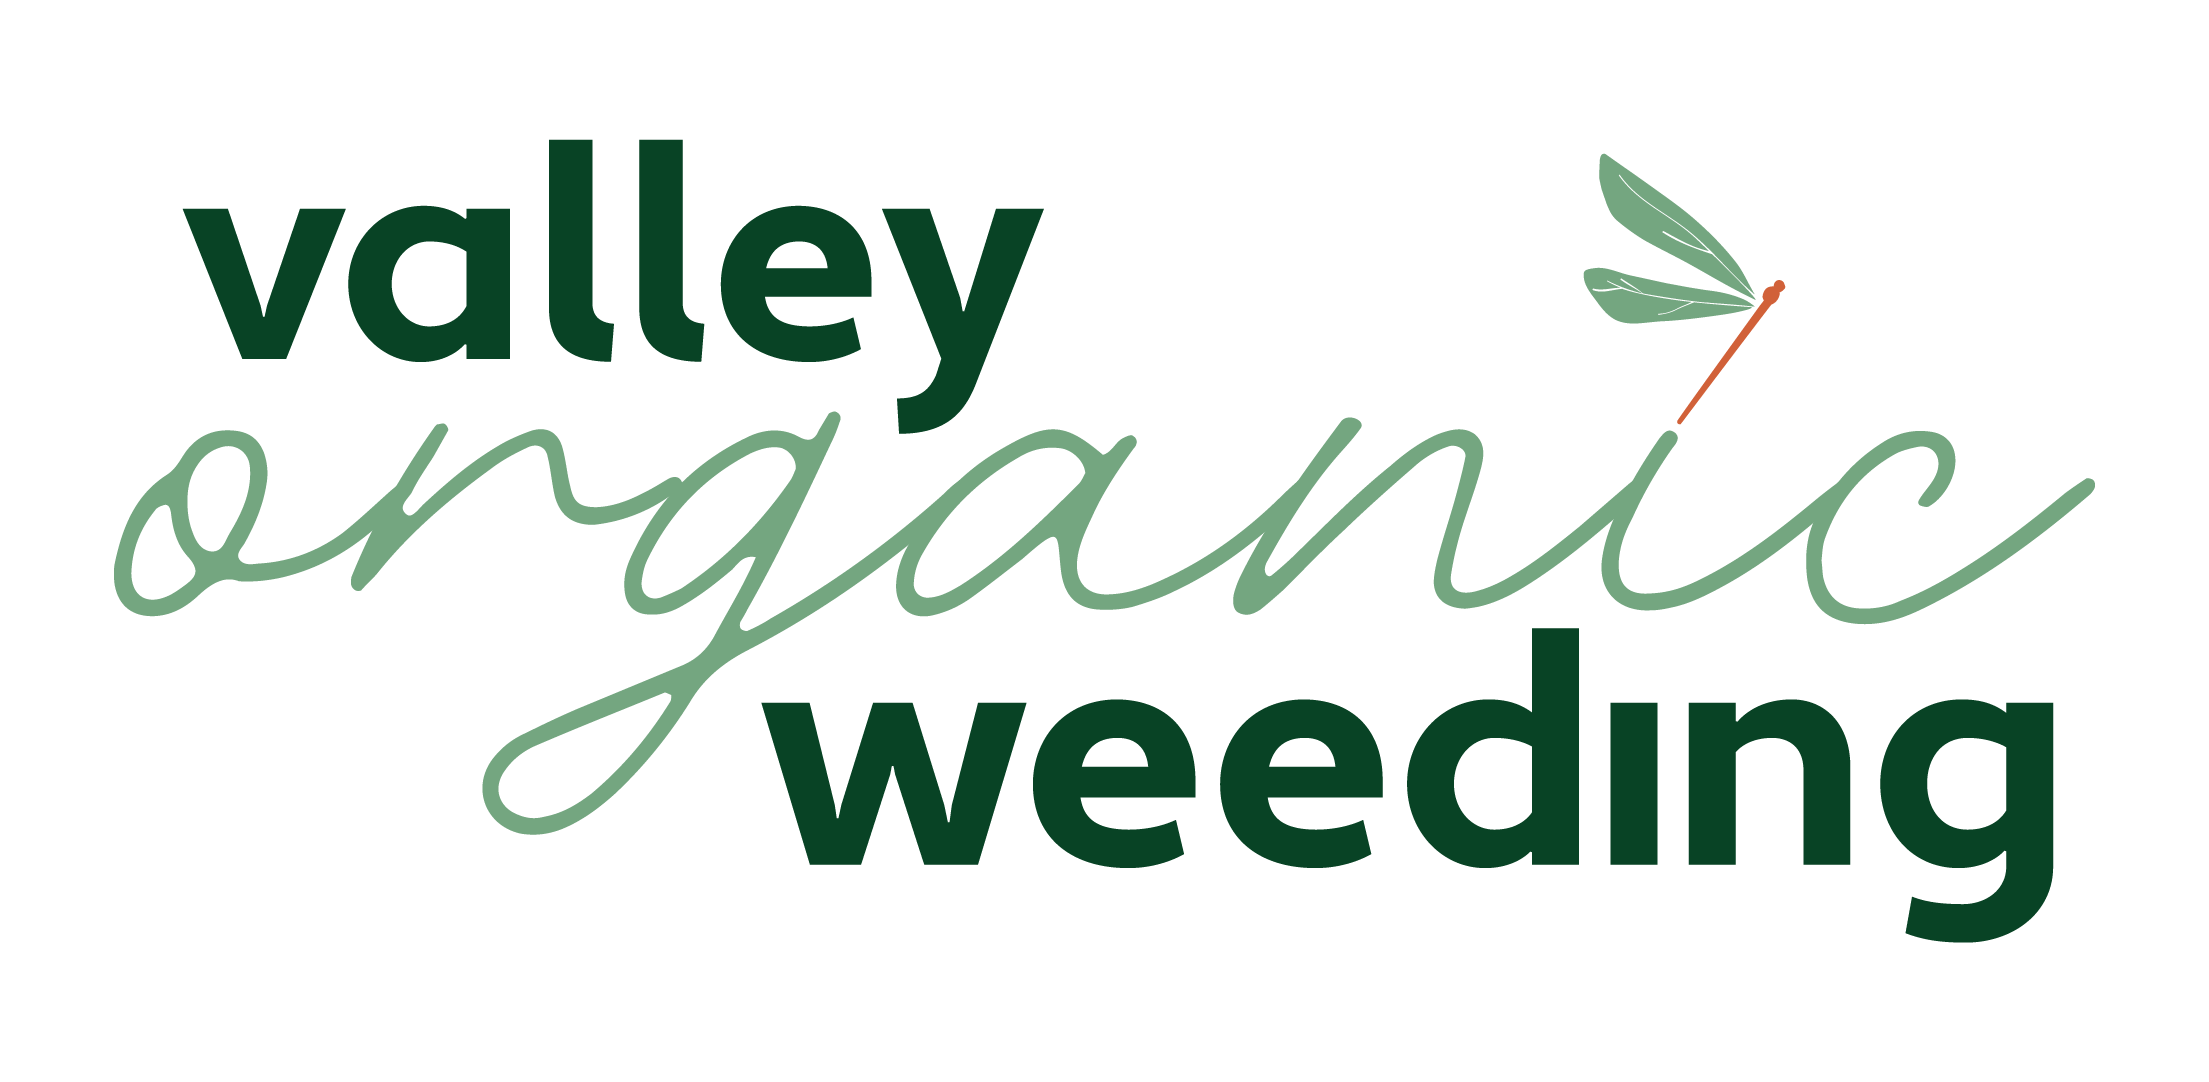 Valley Organic Weeding